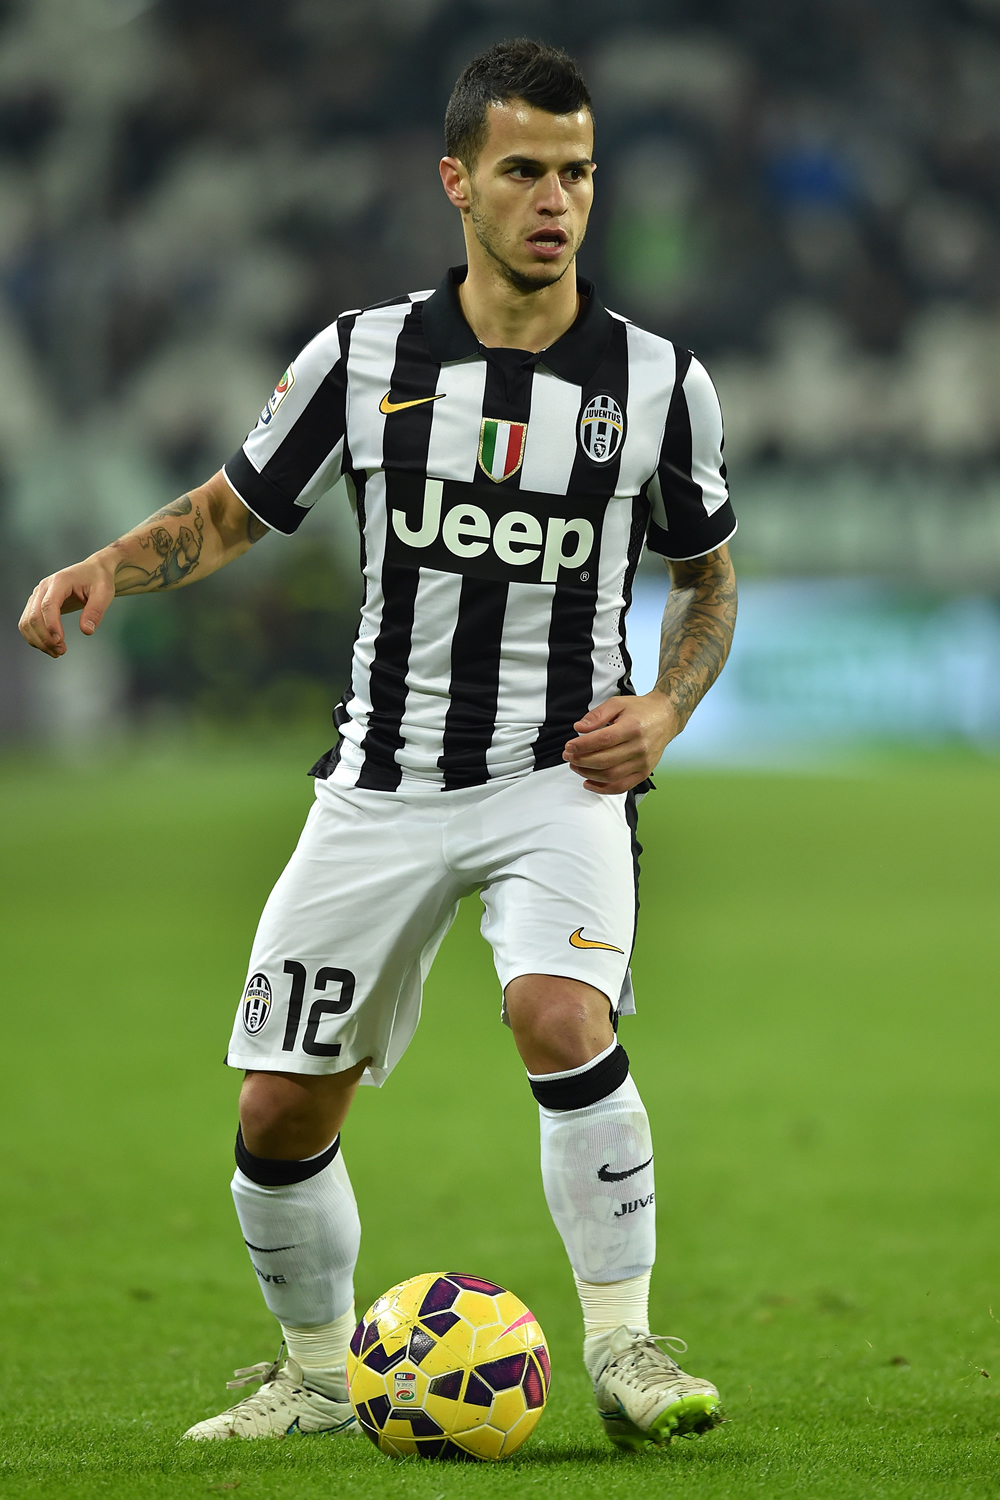 Toronto to acquire Sebastian Giovinco from Juventus